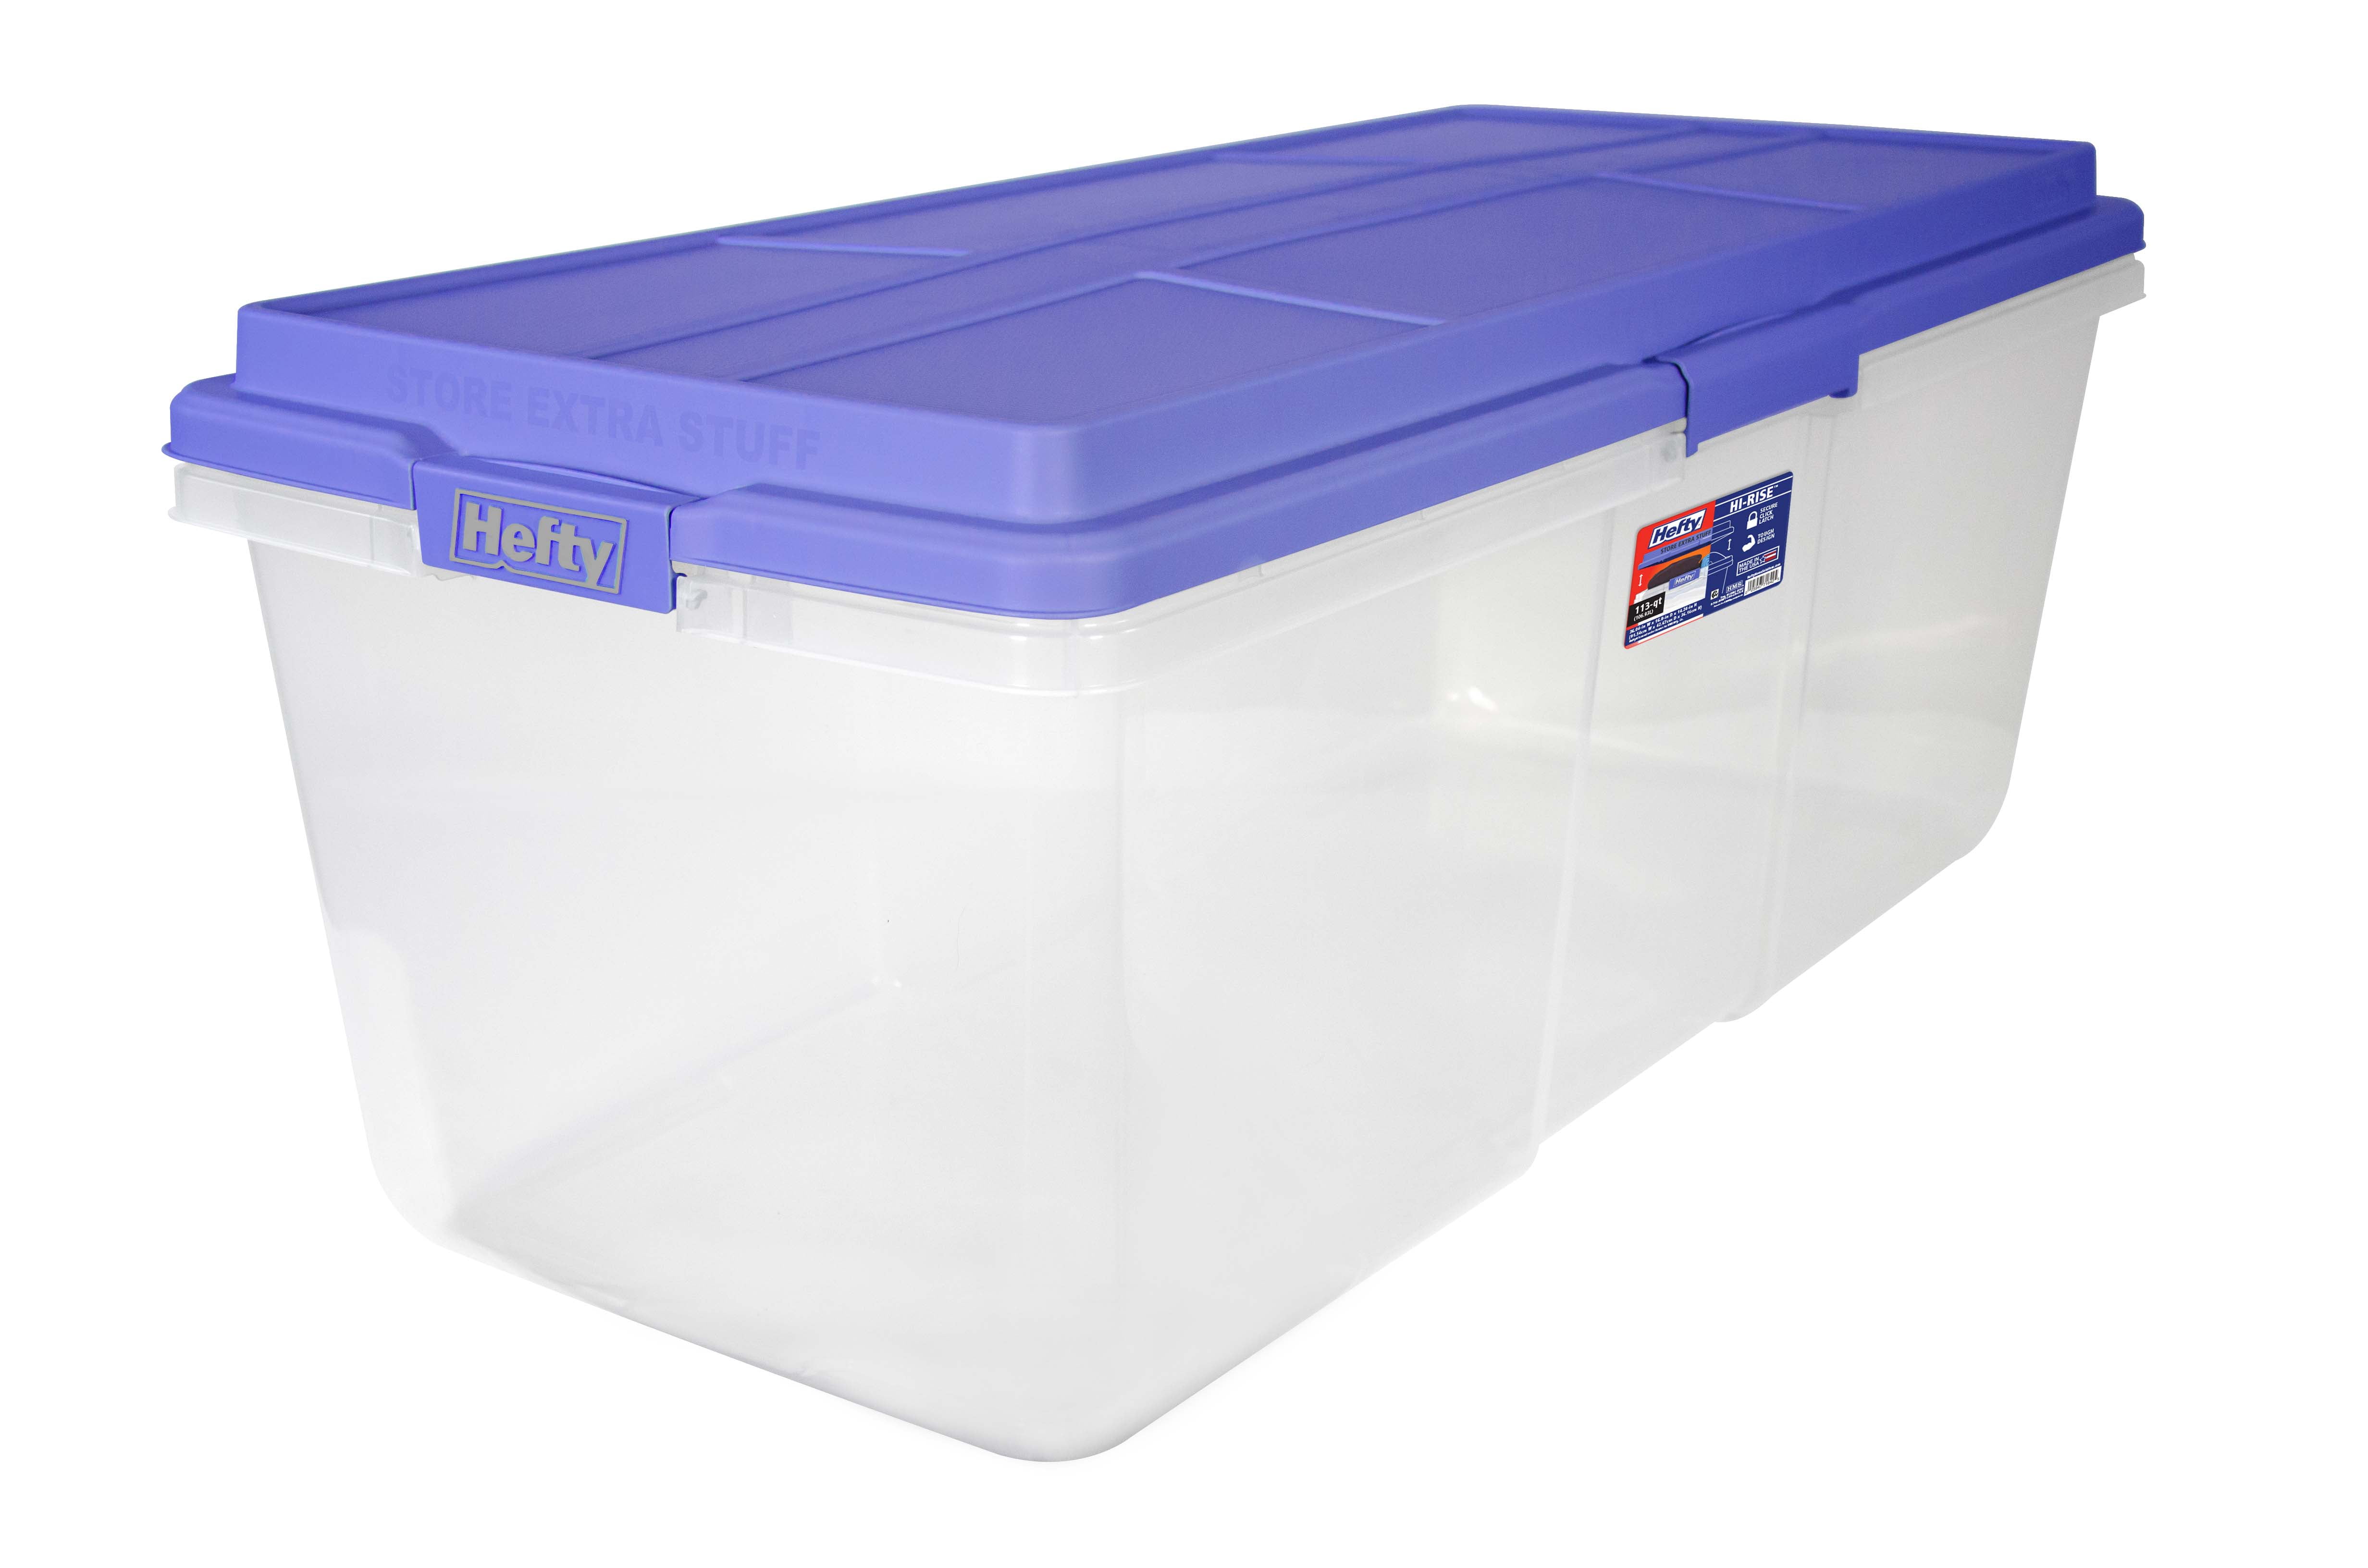 Hefty 18 Qt. Clear Storage Bin with Blue HI-RISE Lid 